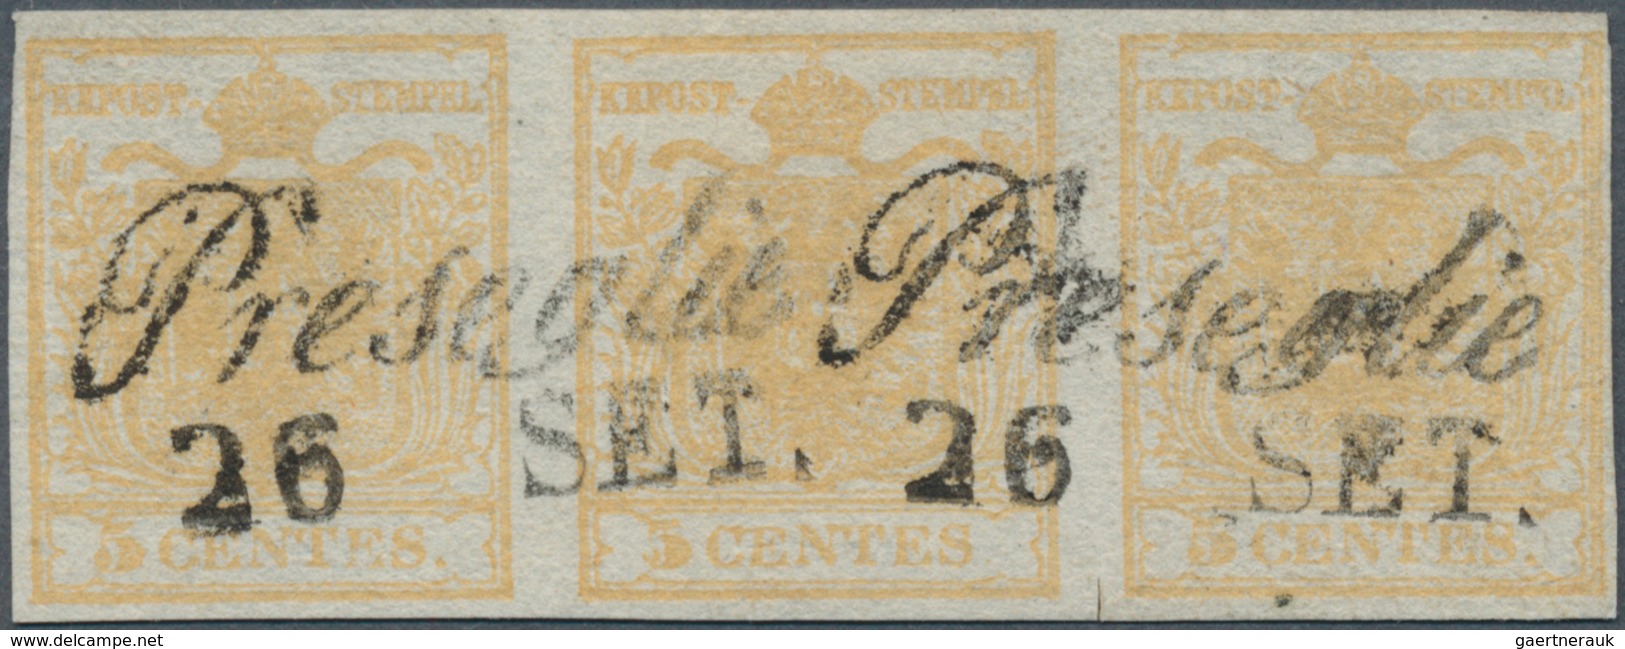 Österreich - Lombardei Und Venetien: 1850, 5 C Gelbocker, Seidenpapier, Waagerechter 3er-Streifen, A - Lombardije-Venetië